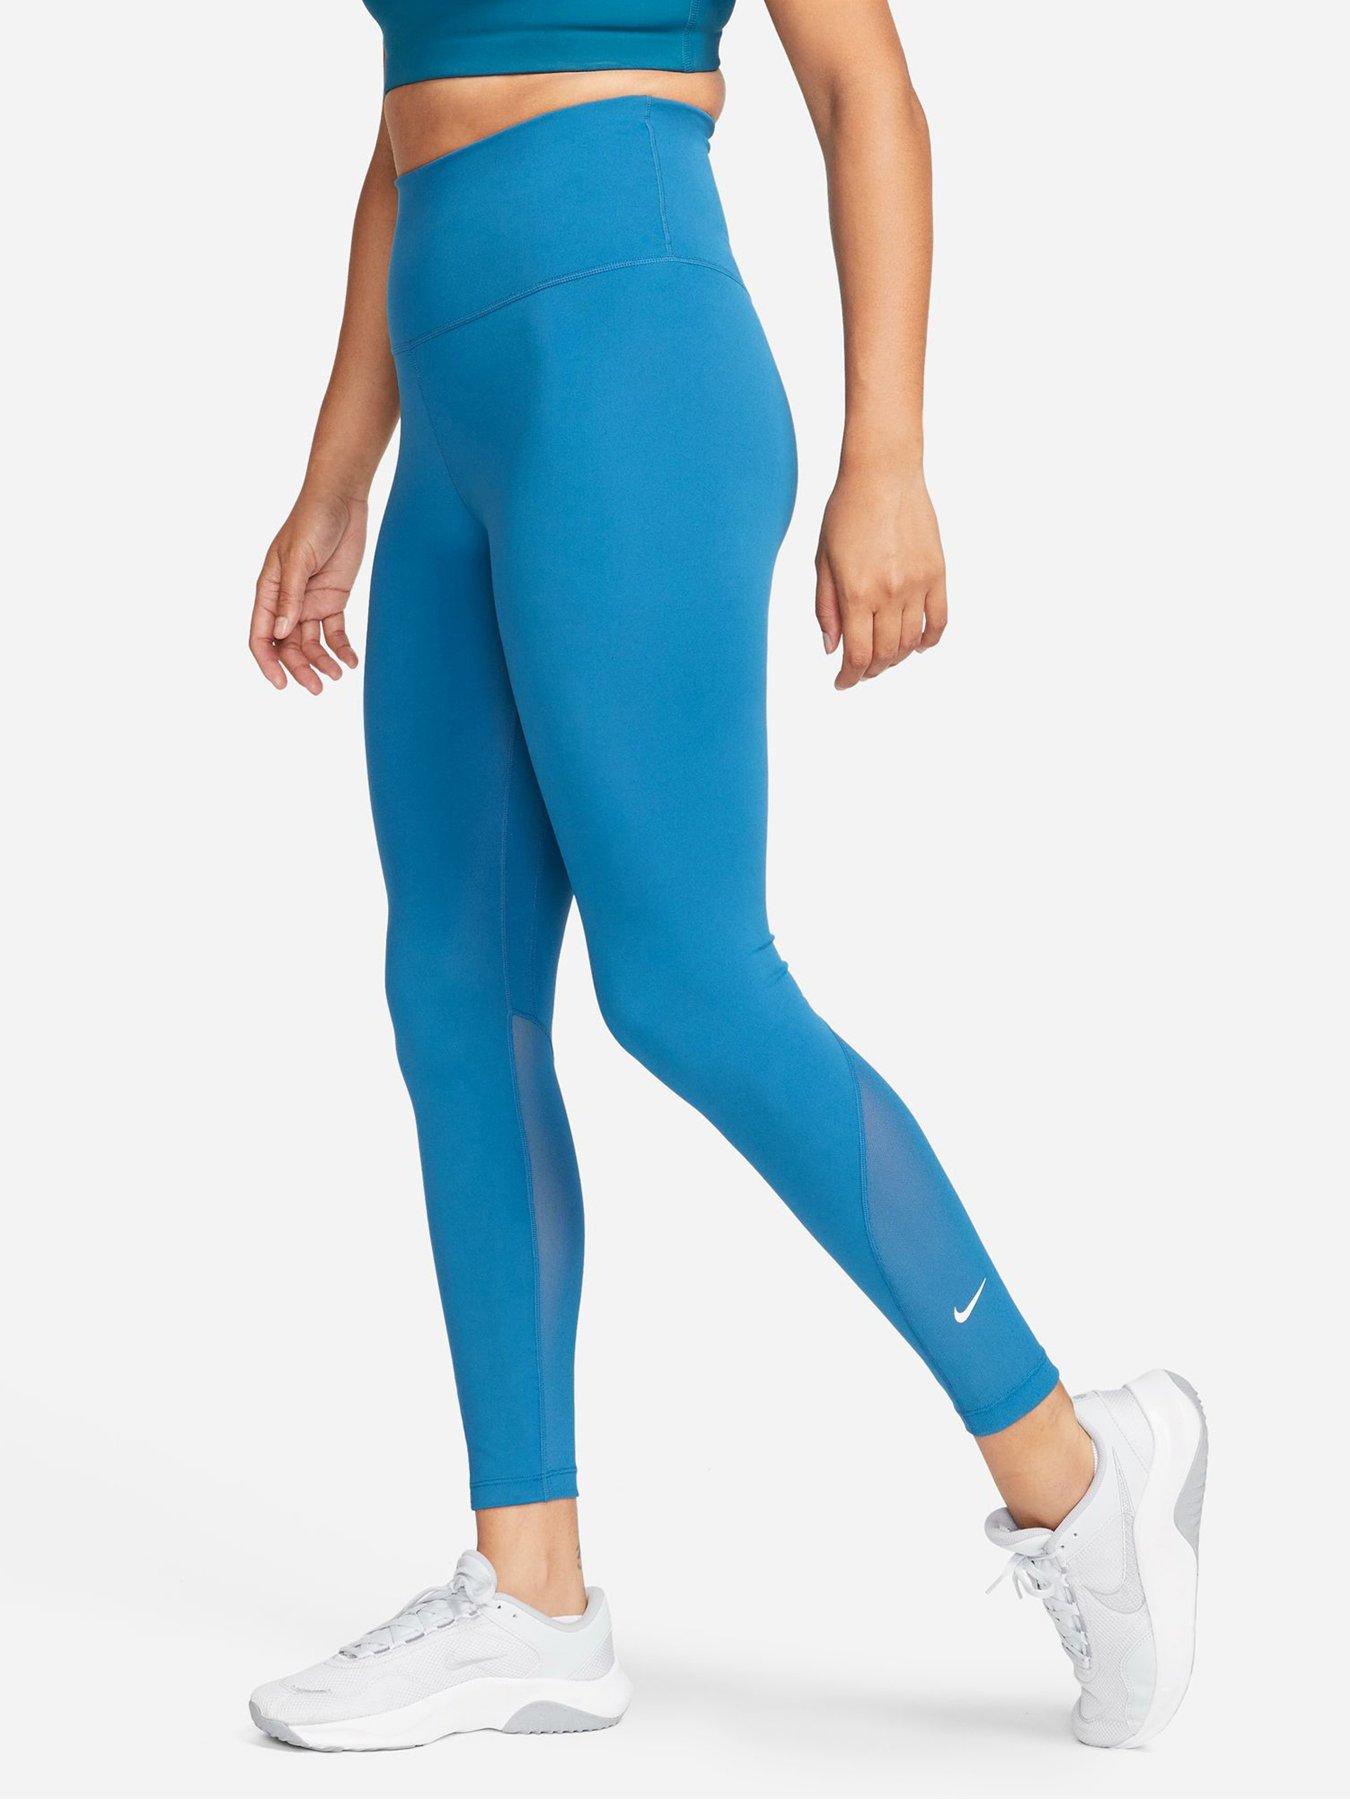 Nike Training Pro 365 high rise 7/8 leggings in teal blue